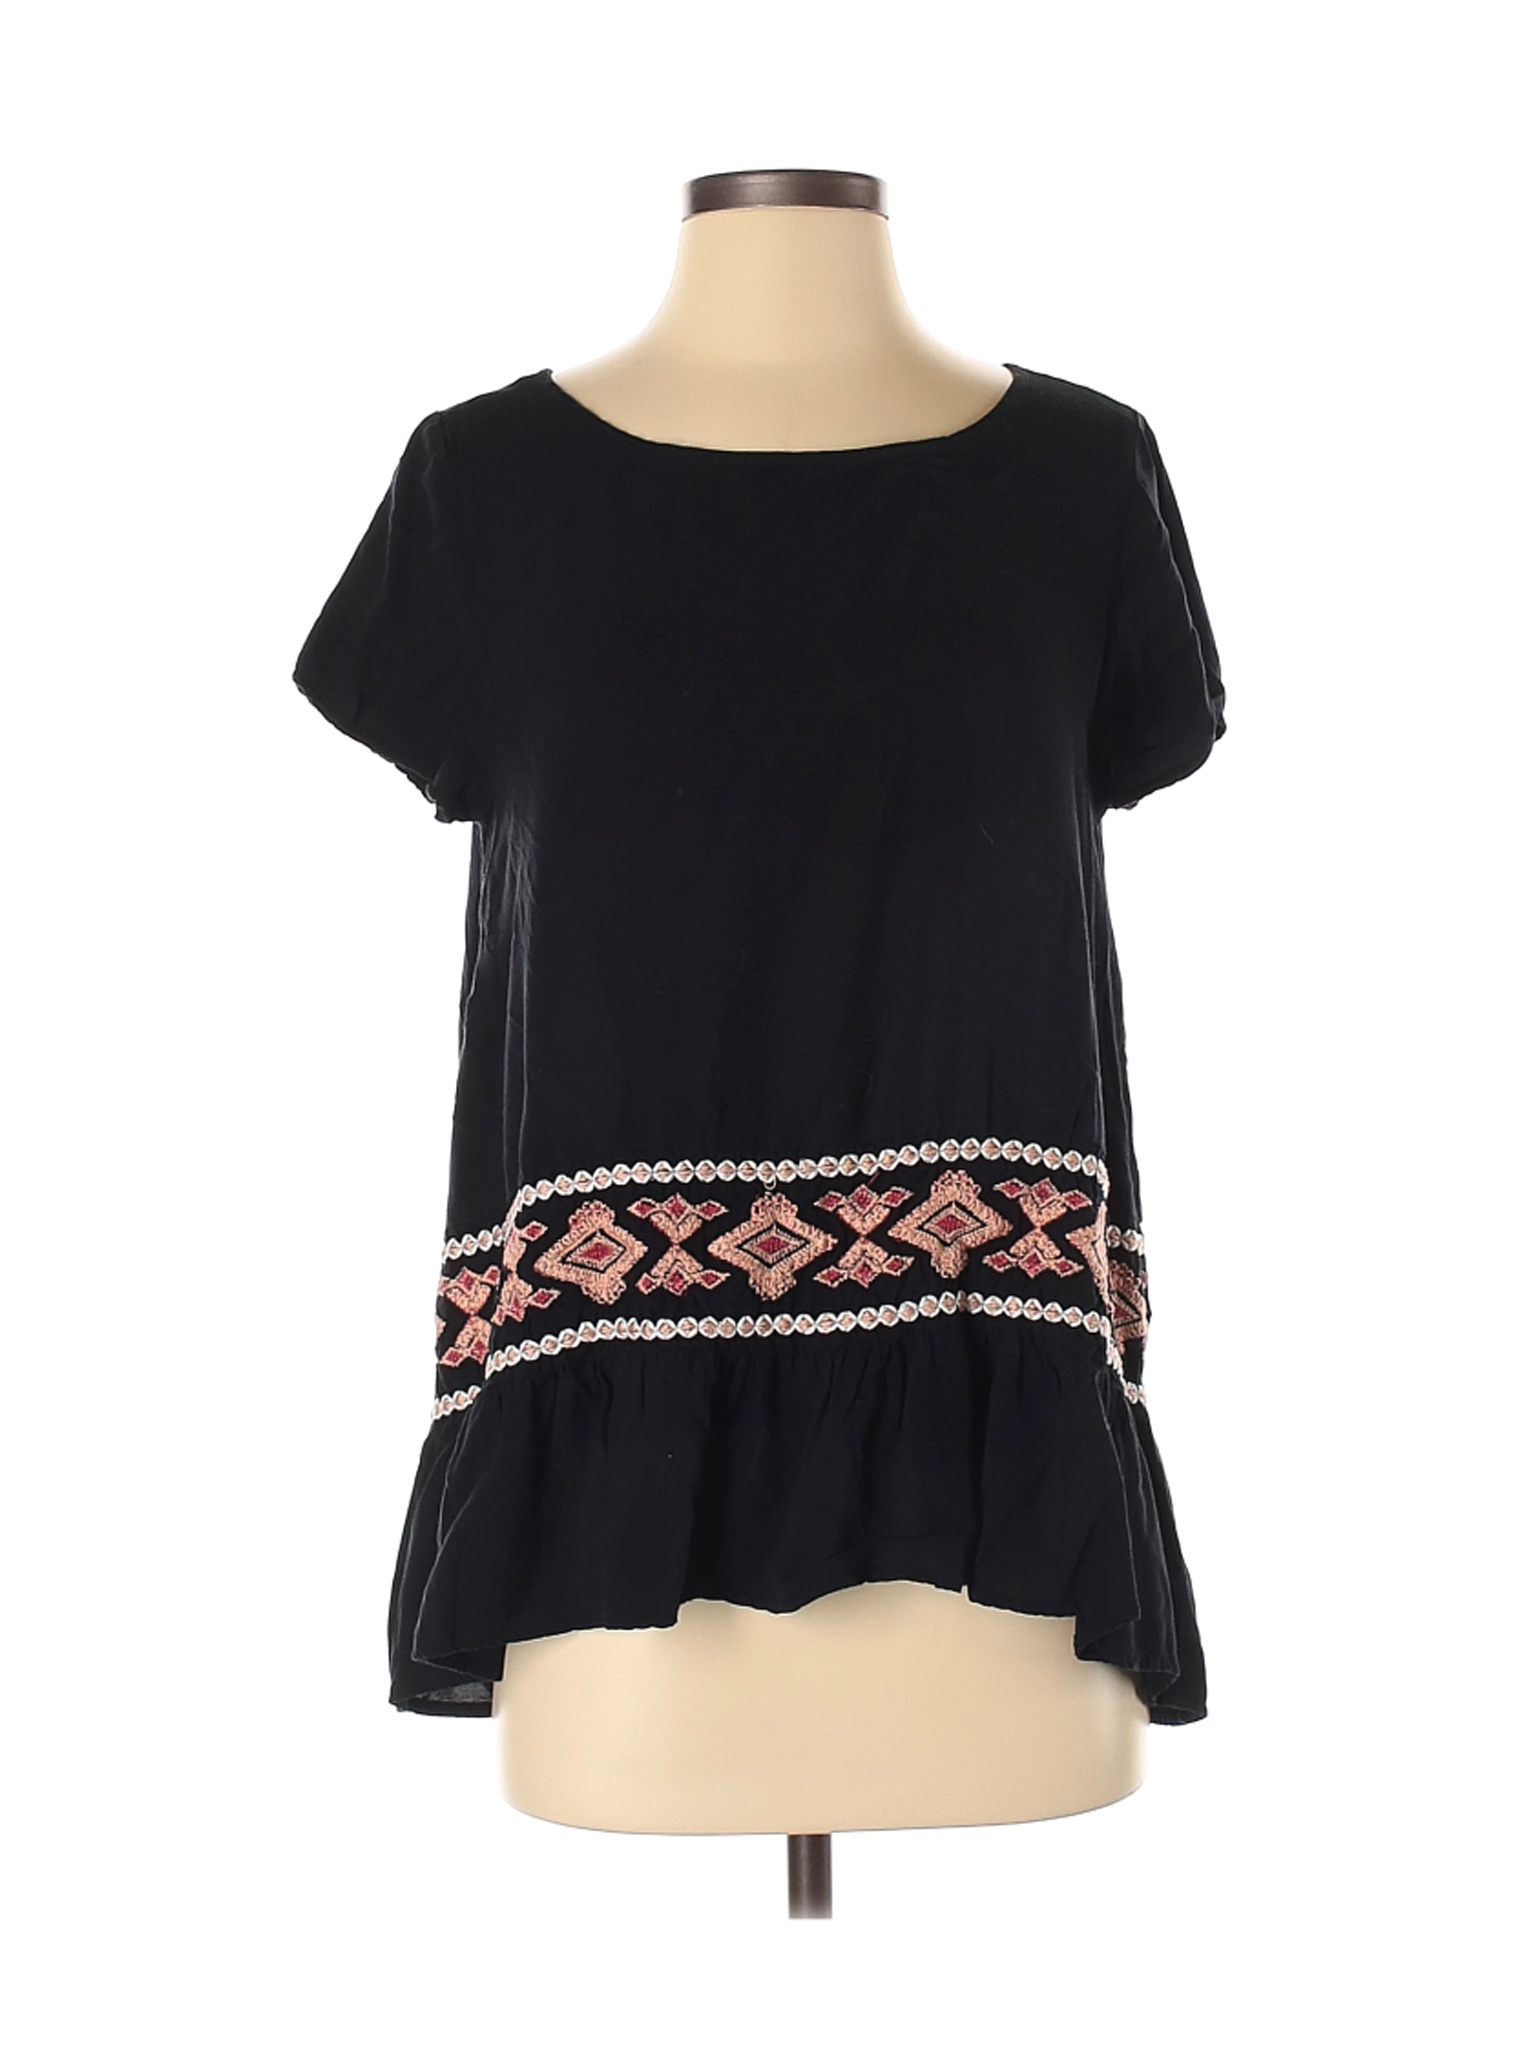 Indigo Women Black Short Sleeve Top S | eBay